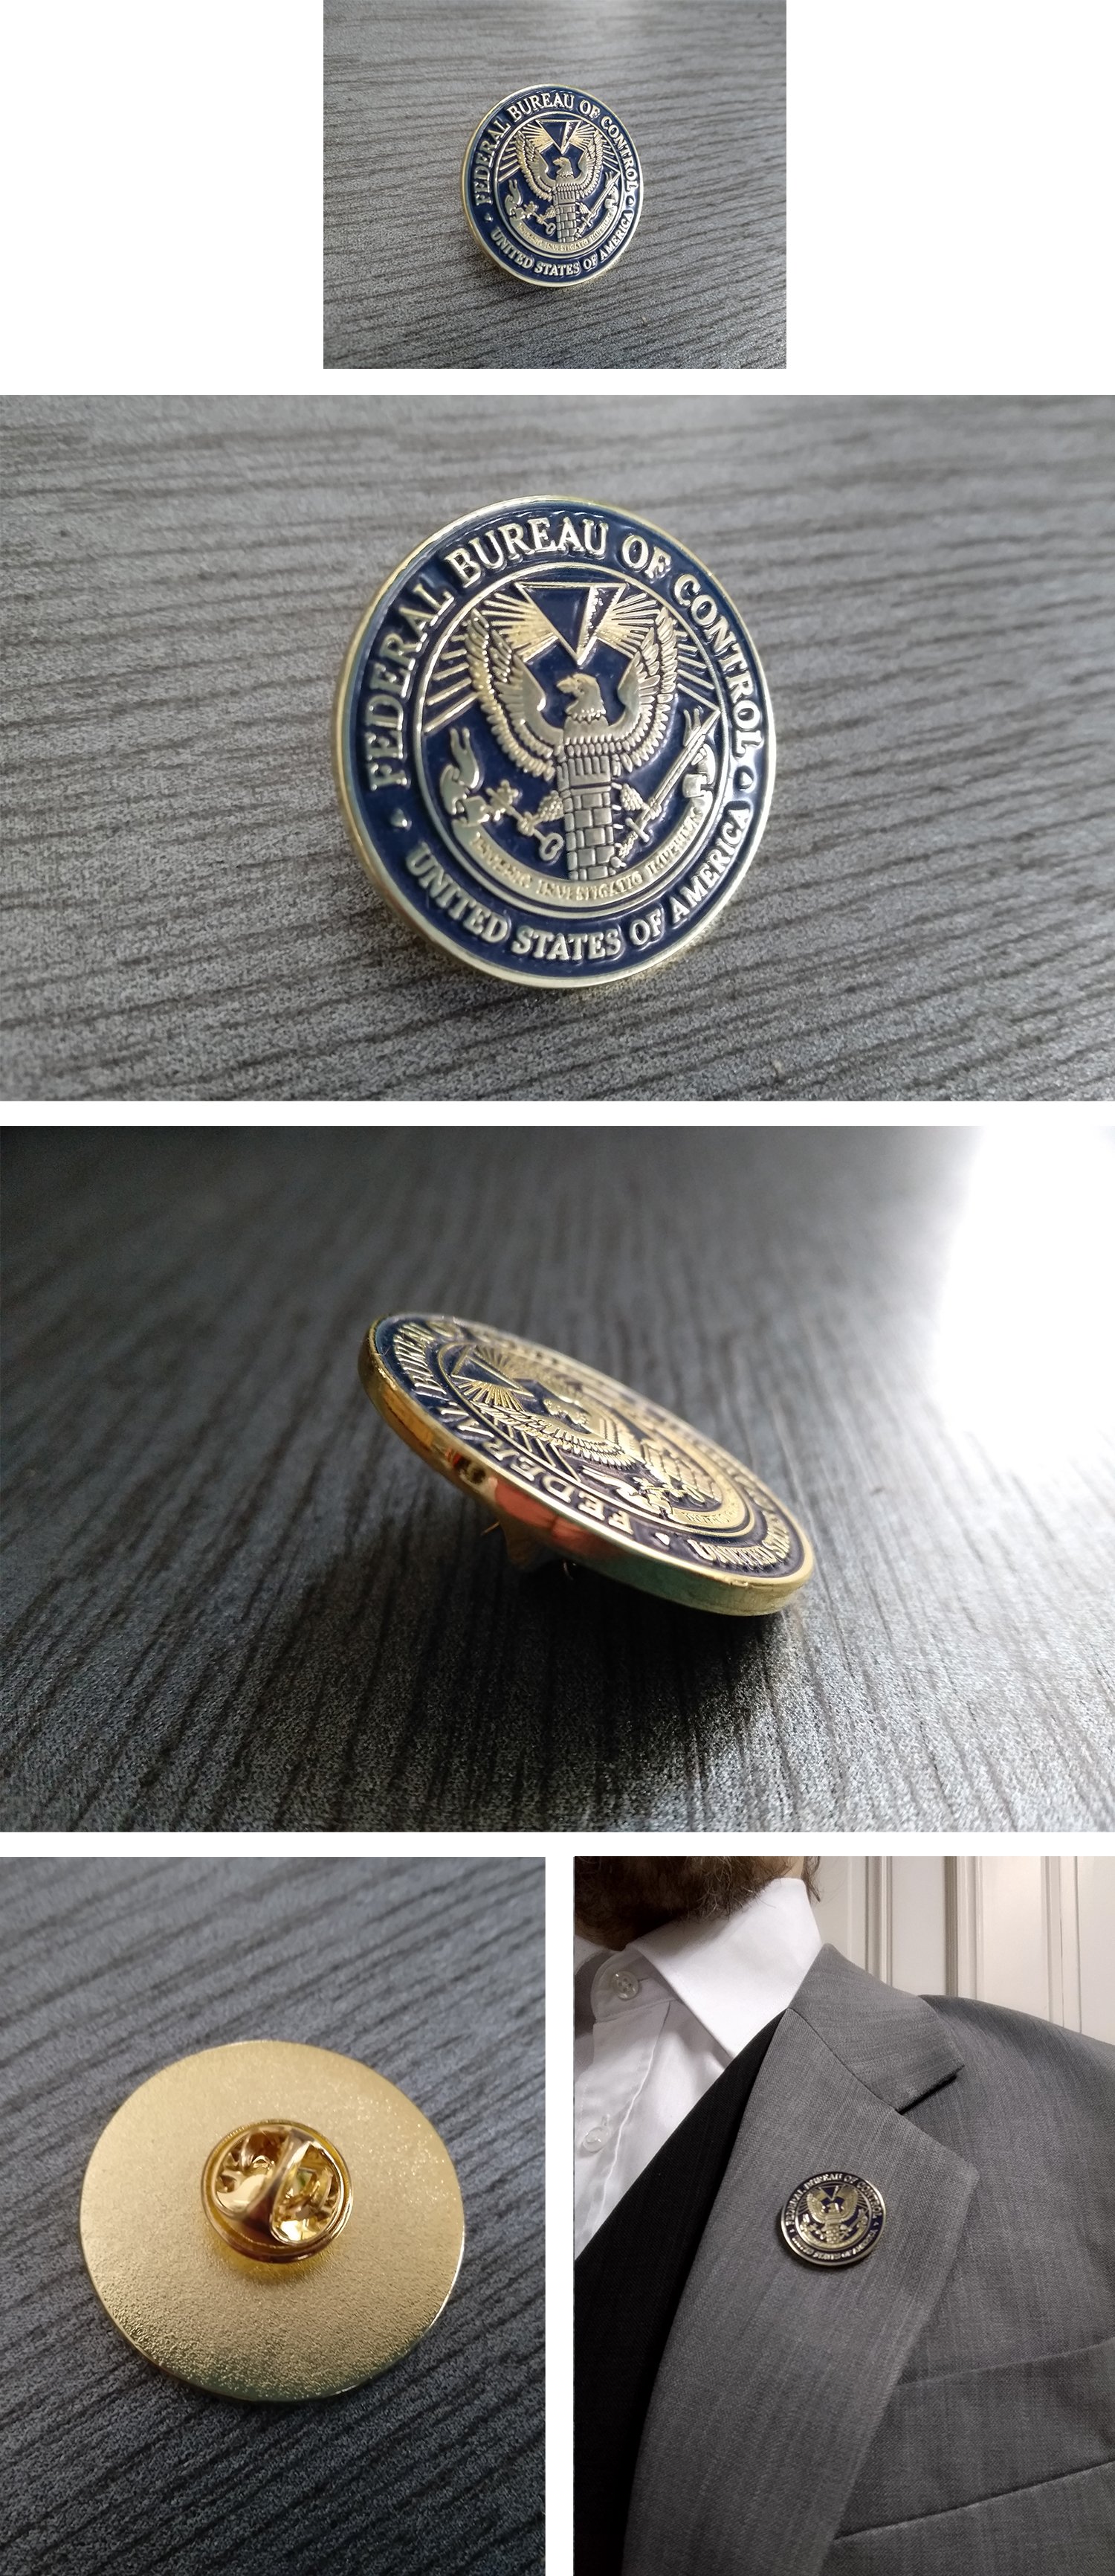 Image of Federal Bureau of Control lapel pin